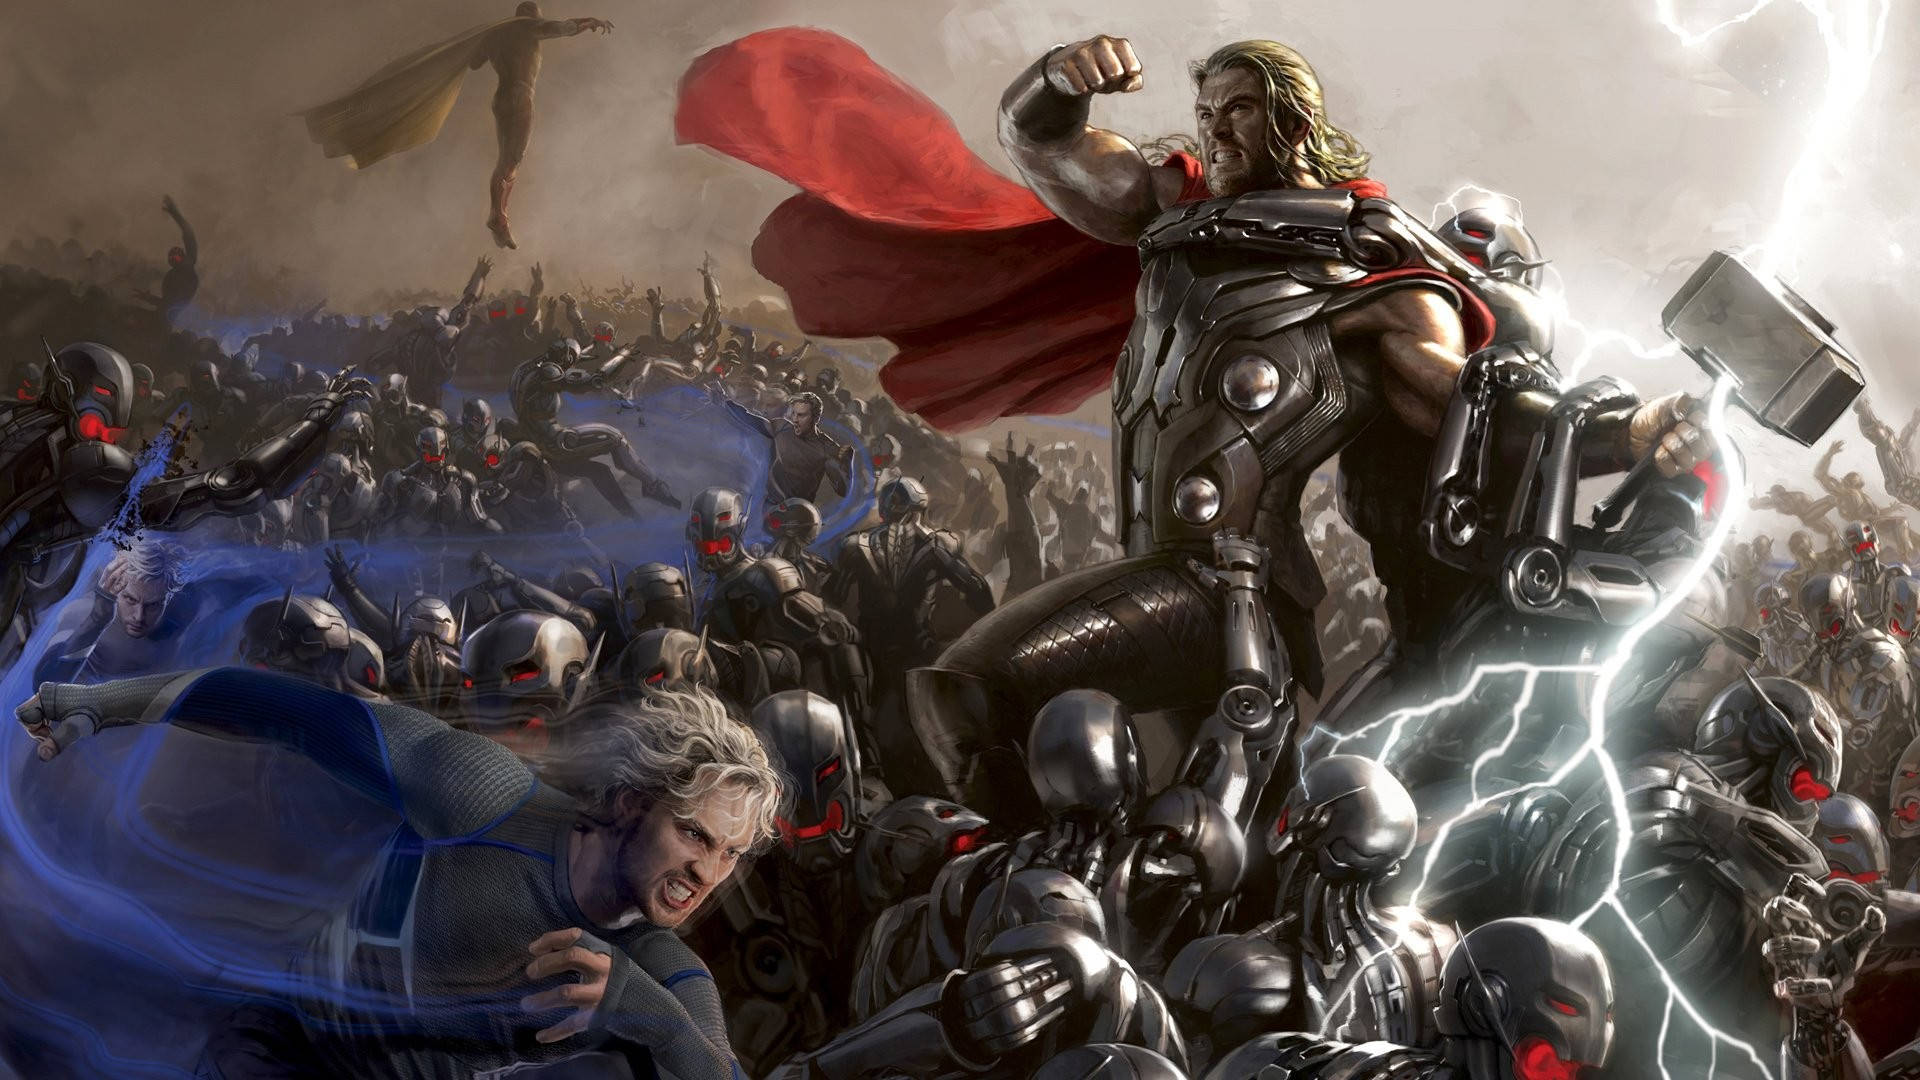 Thor Against The Devilish Ultron